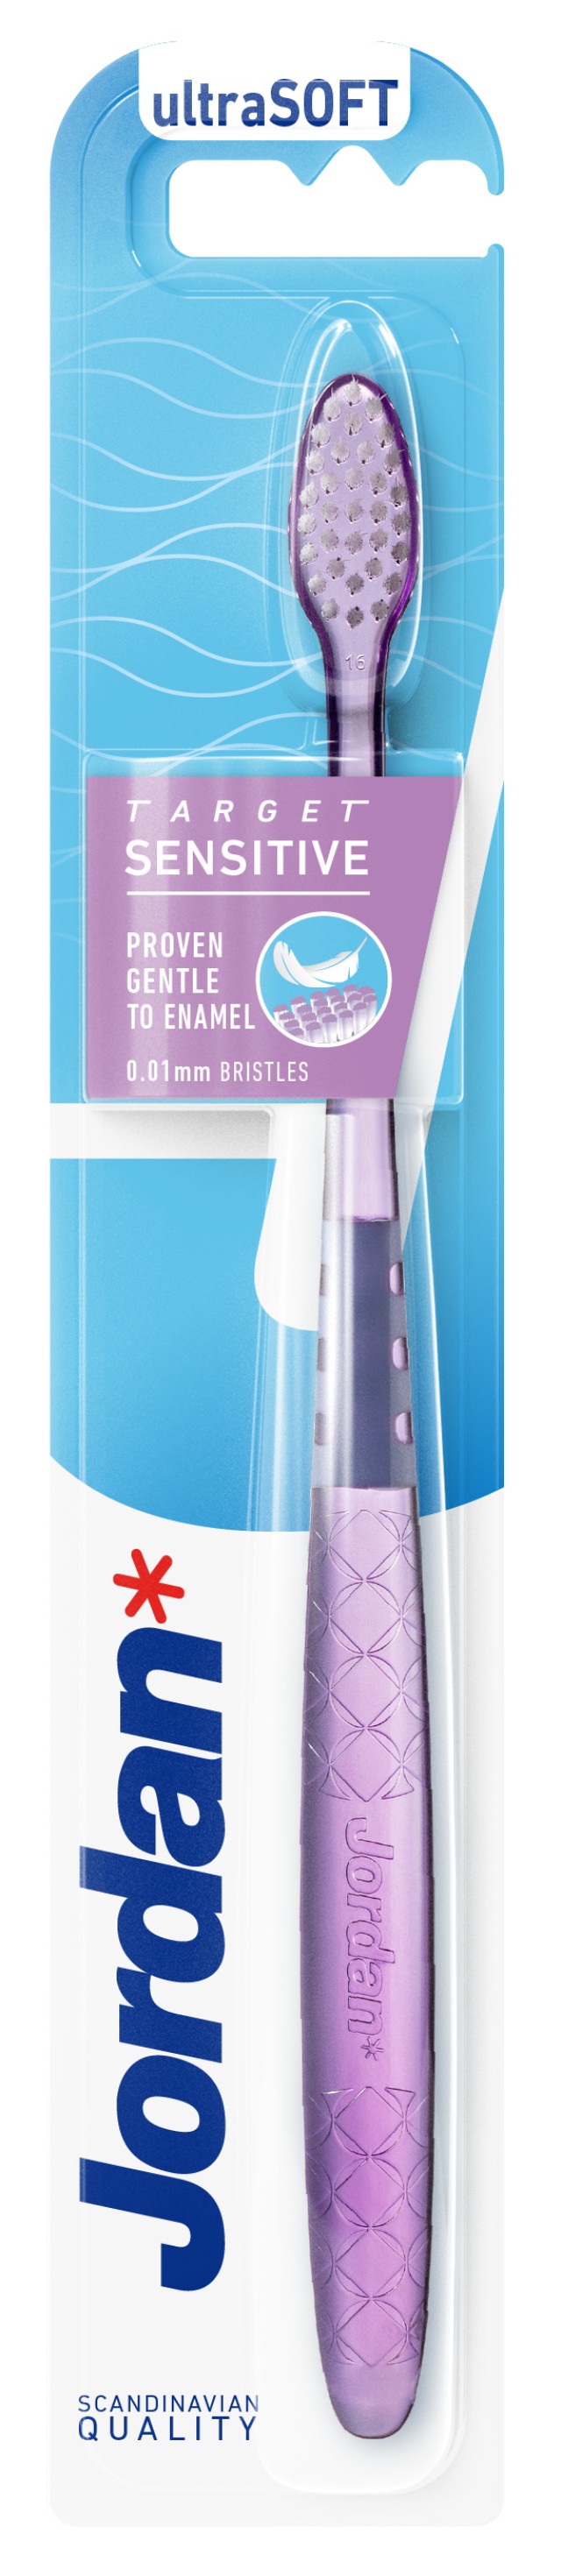 Jordan Target Sensitive Ultra Soft Οδοντόβουρτσα για Ευαίσθητα Δόντια και Ούλα Πολύ Μαλακή Μωβ 1 Τεμάχιο